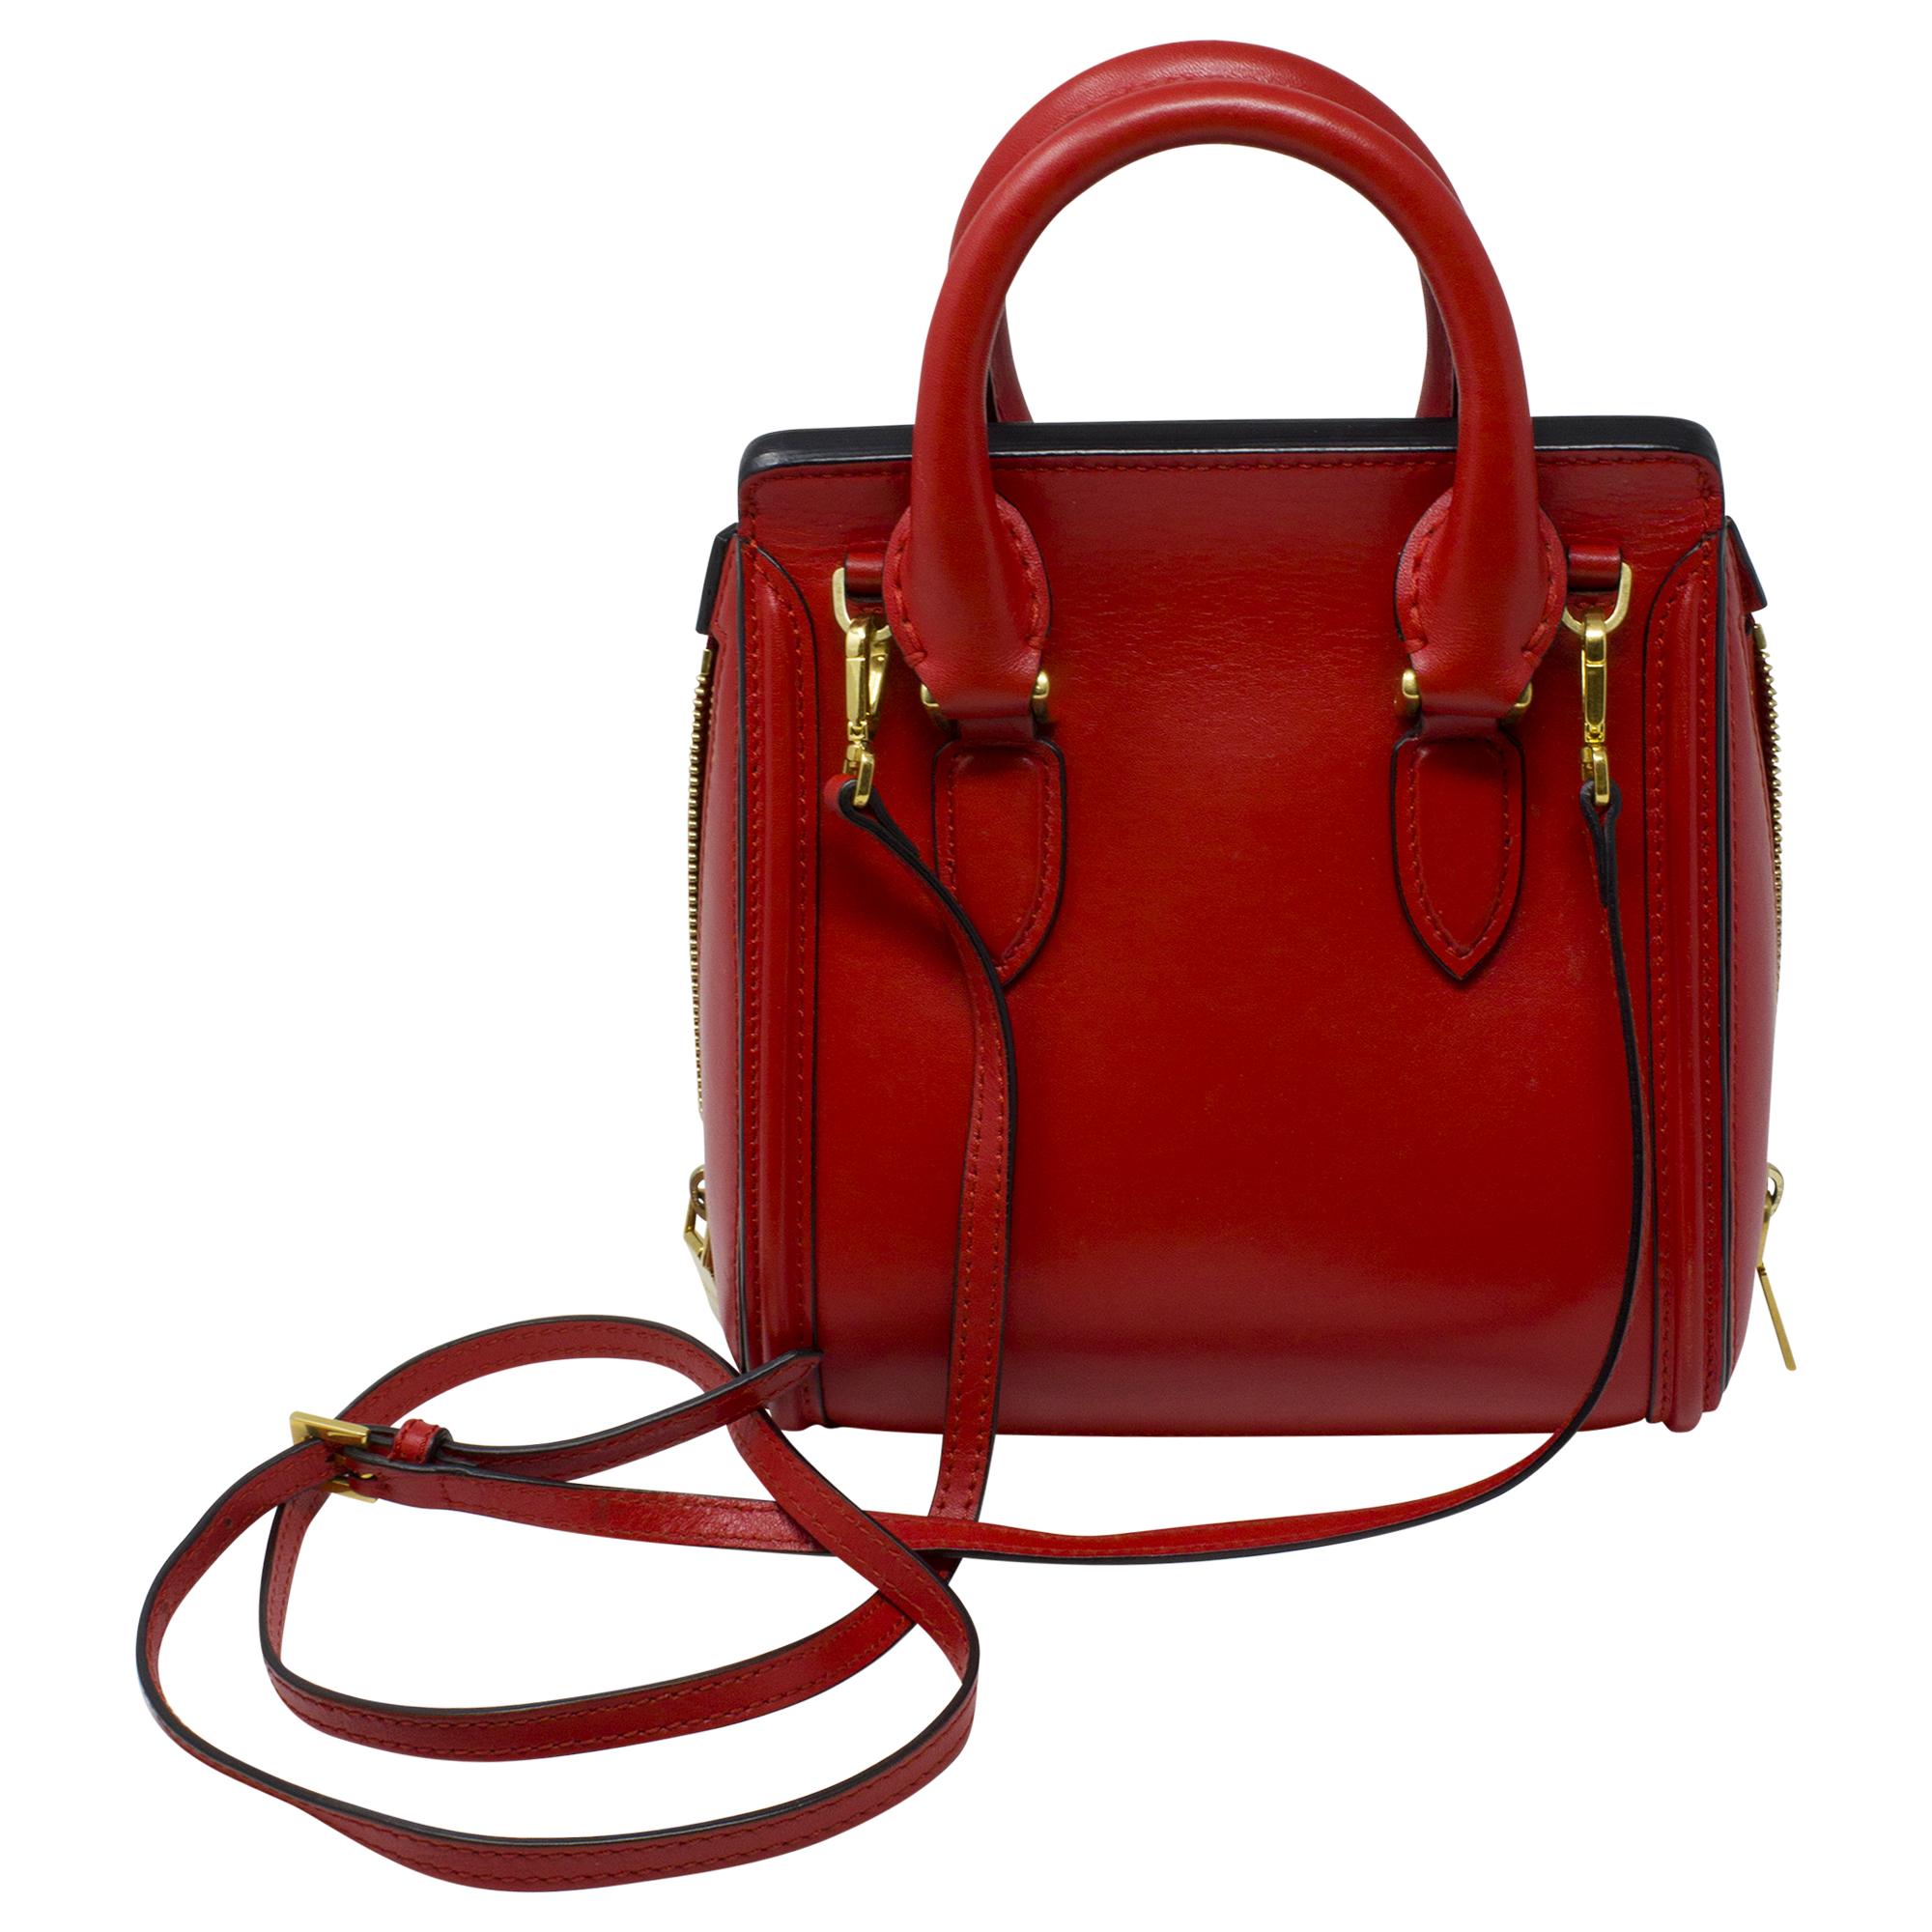 Alexander McQueen Red Top Handle Bag In Excellent Condition For Sale In Atlanta, GA